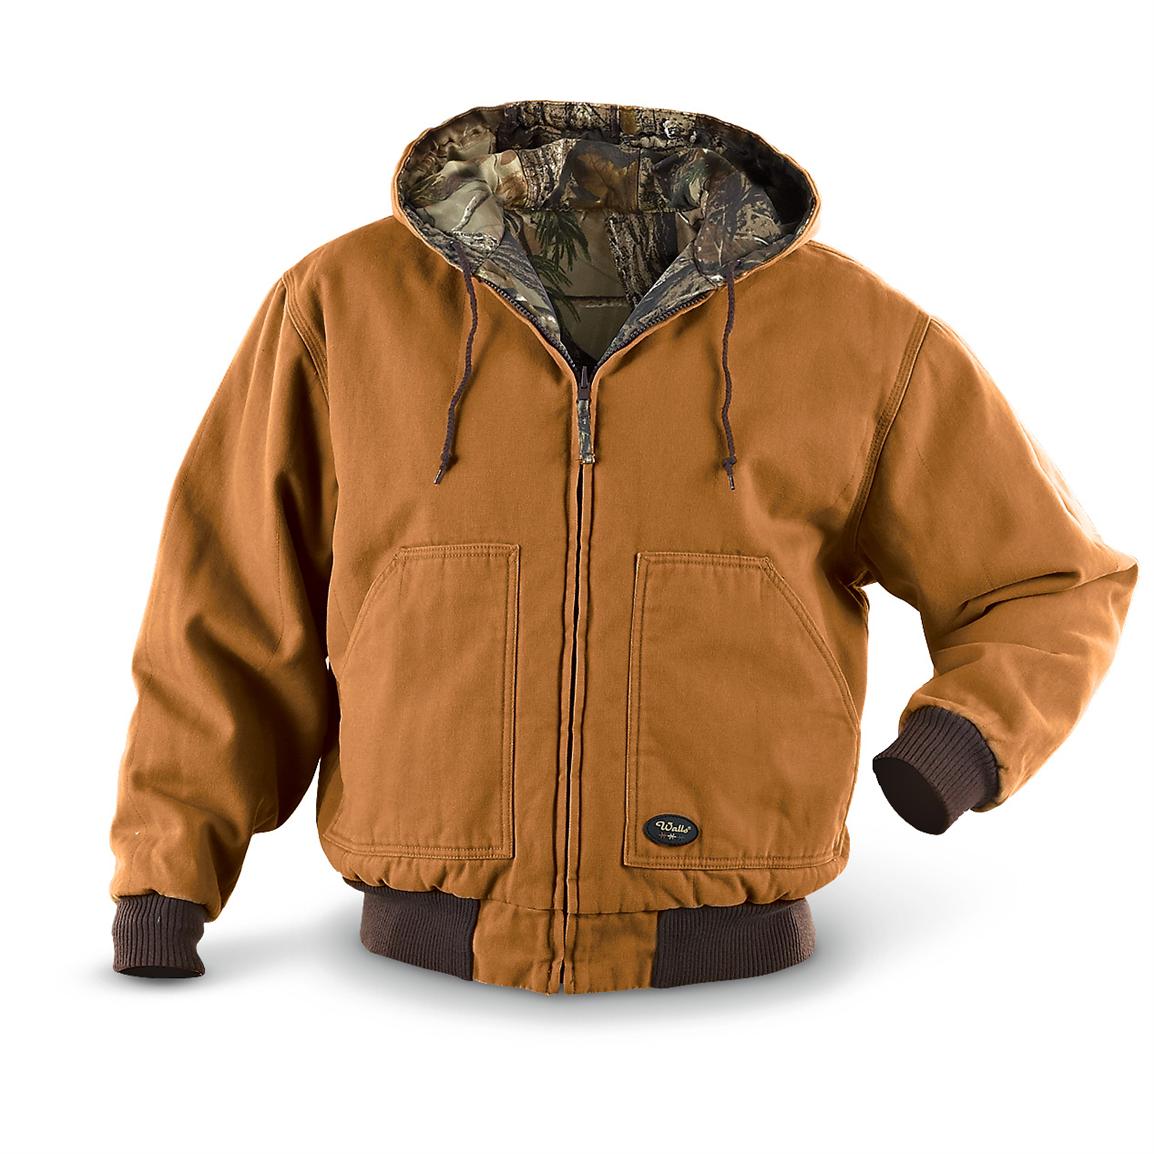 Walls® Reversible Hooded Jacket, Brown / Realtree® All - Purpose